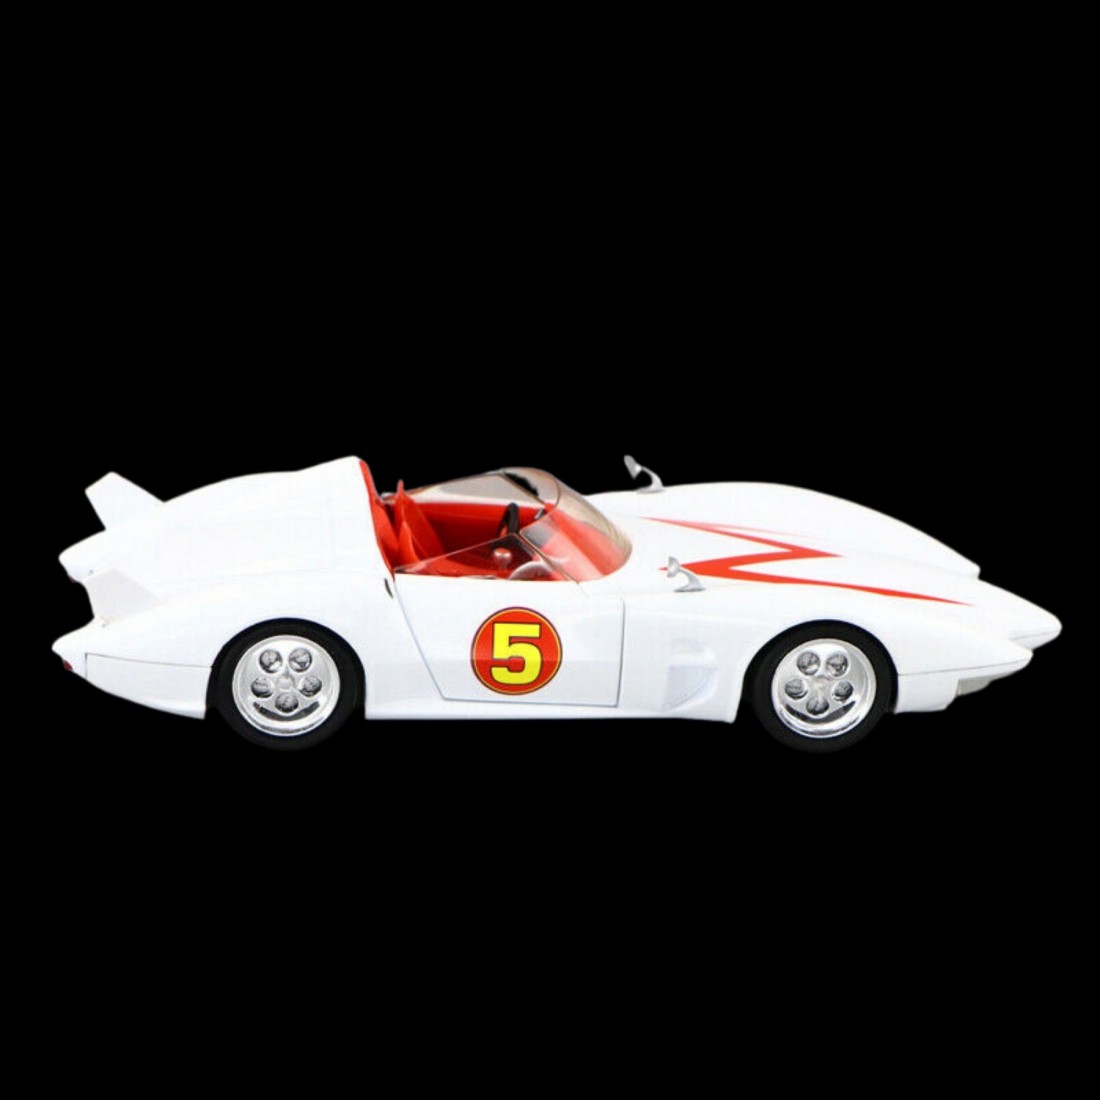 speed-racer-mach-5-plastic-assembly-snap-model-kit-polar-lights-kit-action-figure-sticker-sheet-included